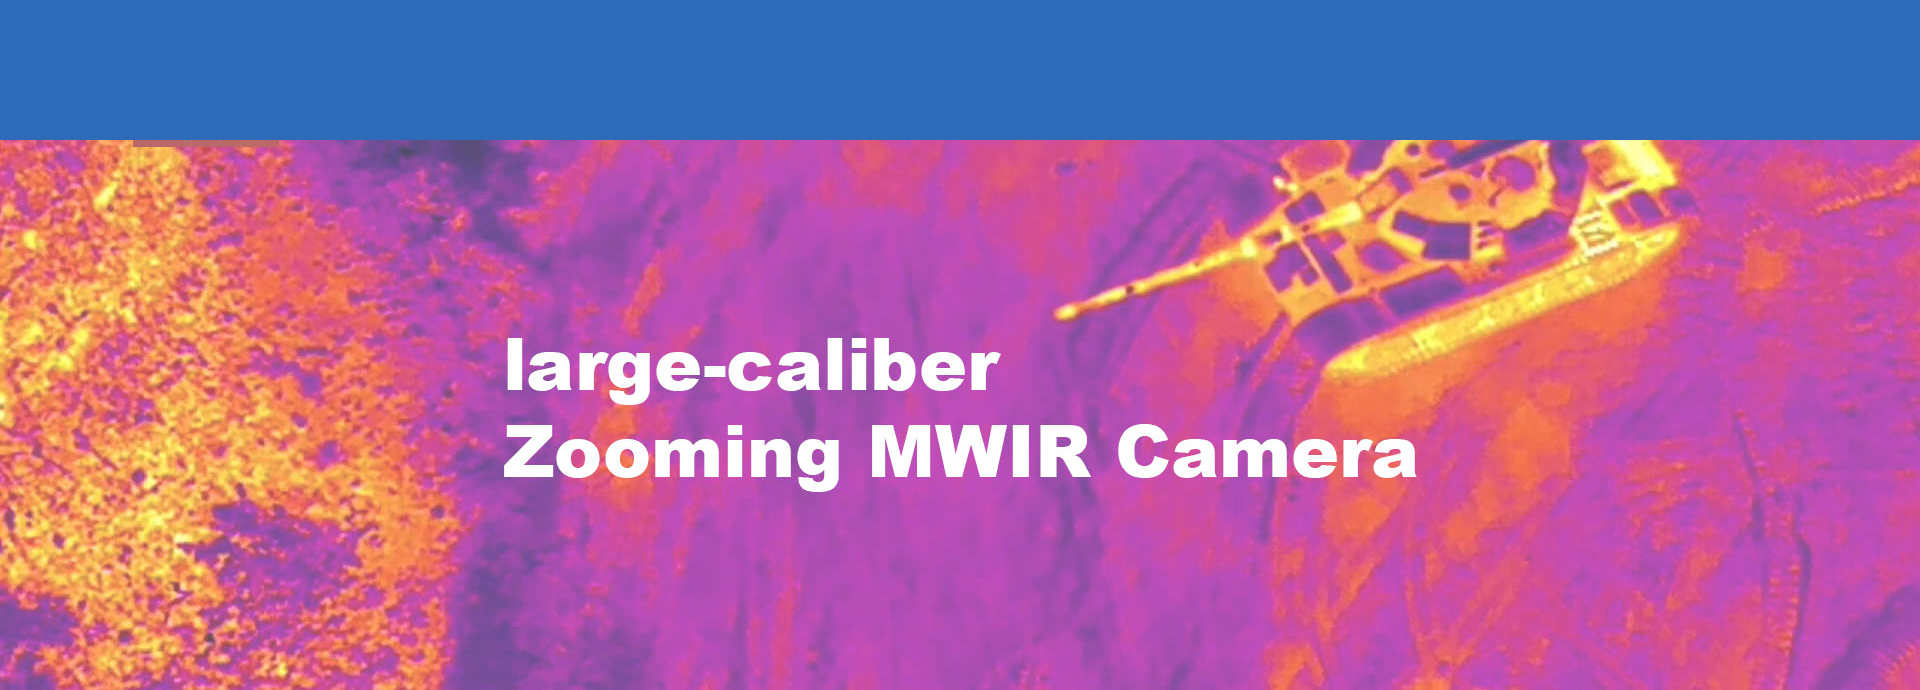 großkalibrige zoomende MWIR-Kamera